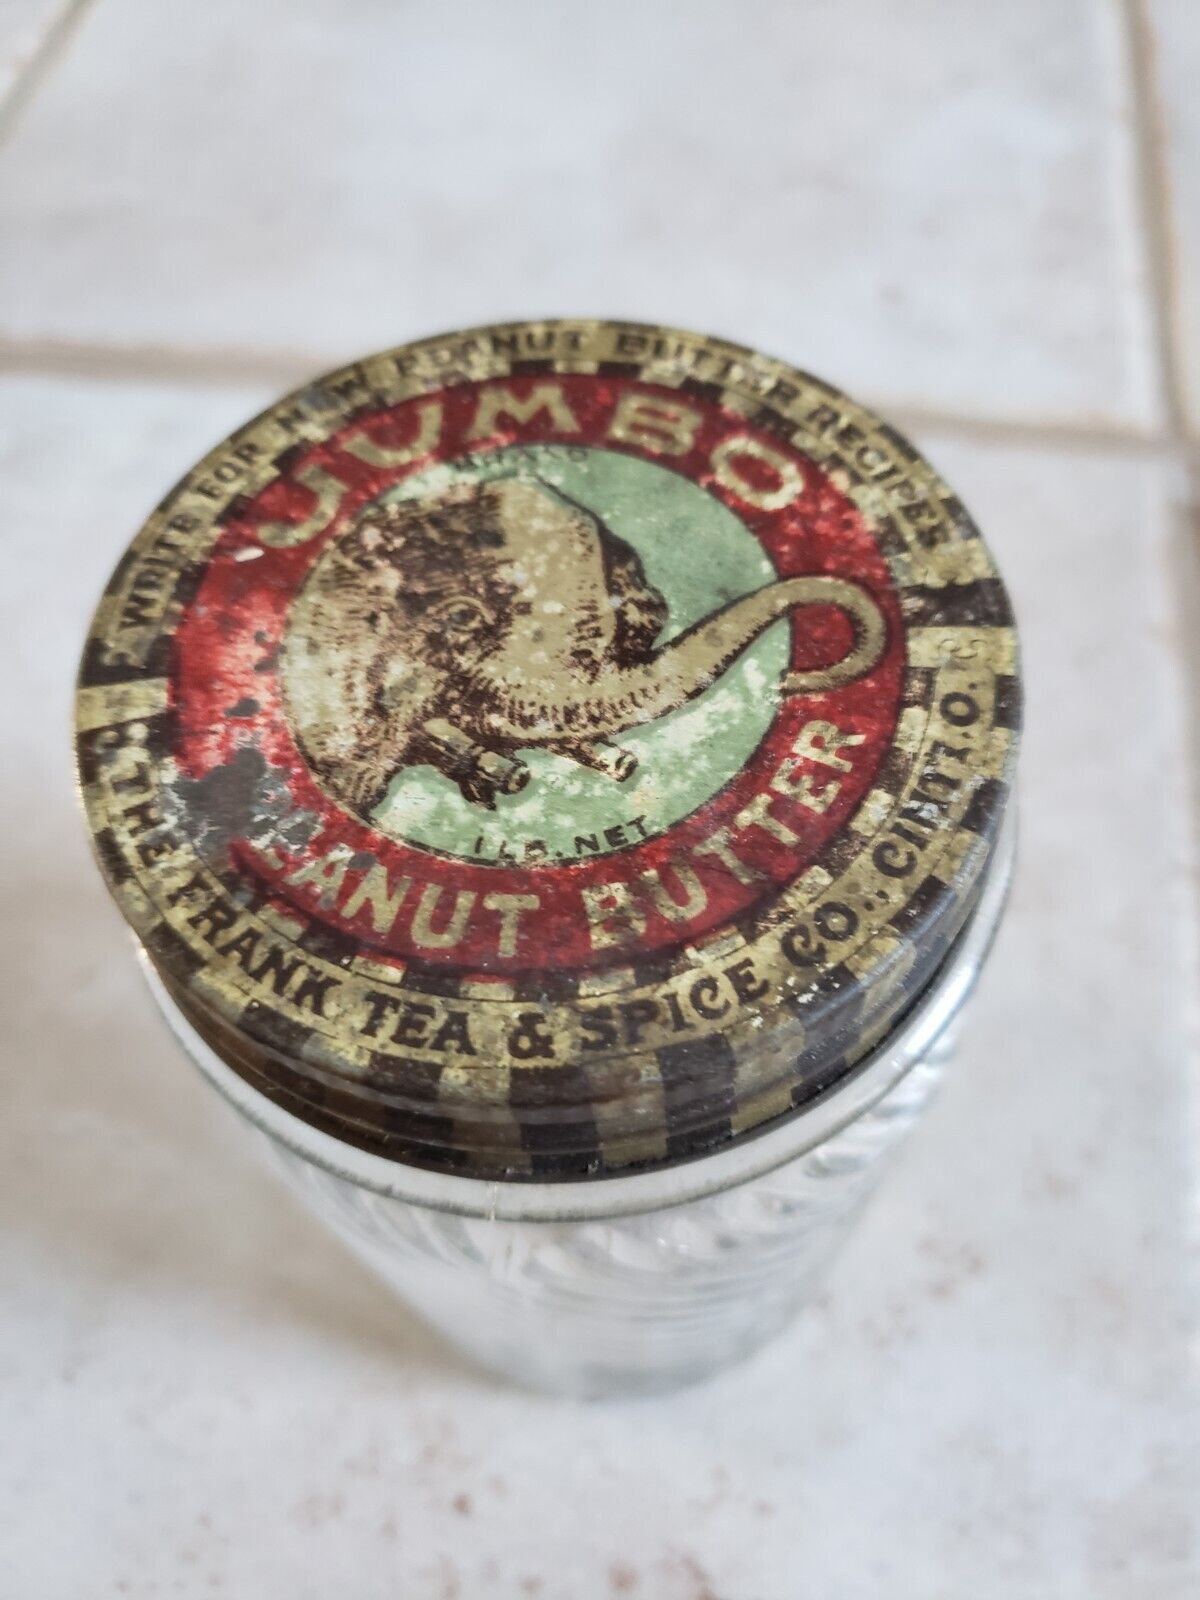 Original early jumbo peanut butter jar with original lid